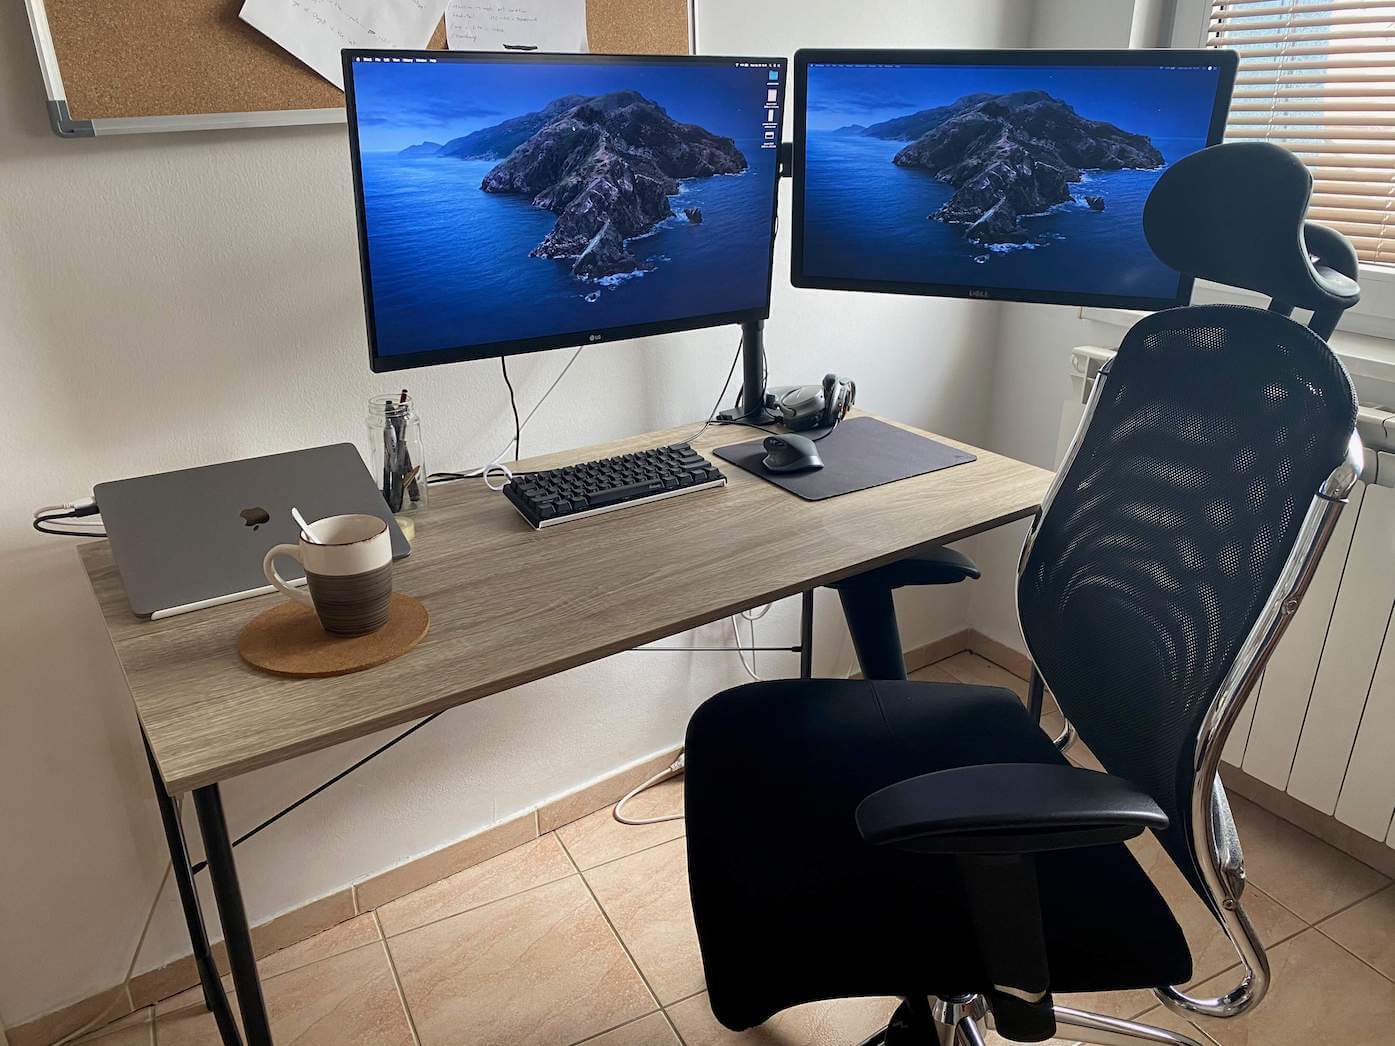 Dino's home office setup.